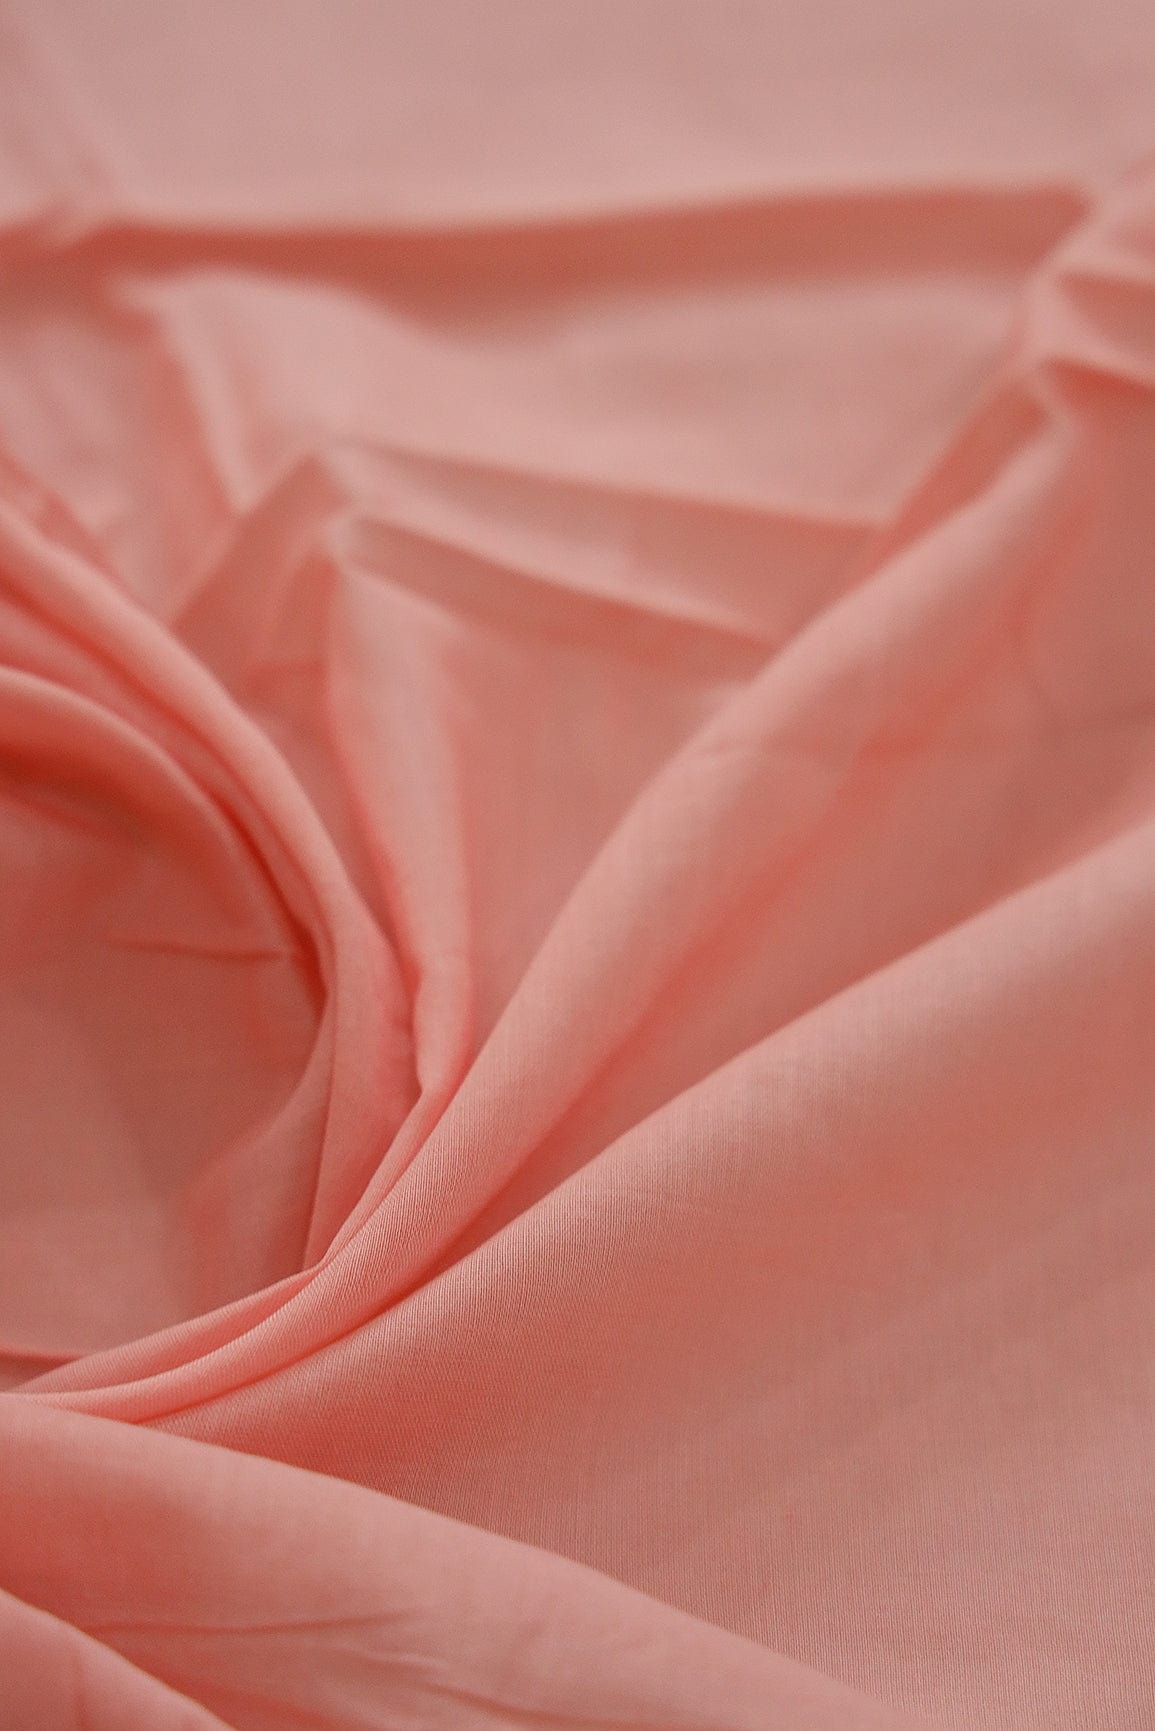 doeraa Plain Dyed Fabrics Pink Lawn Cotton Fabric